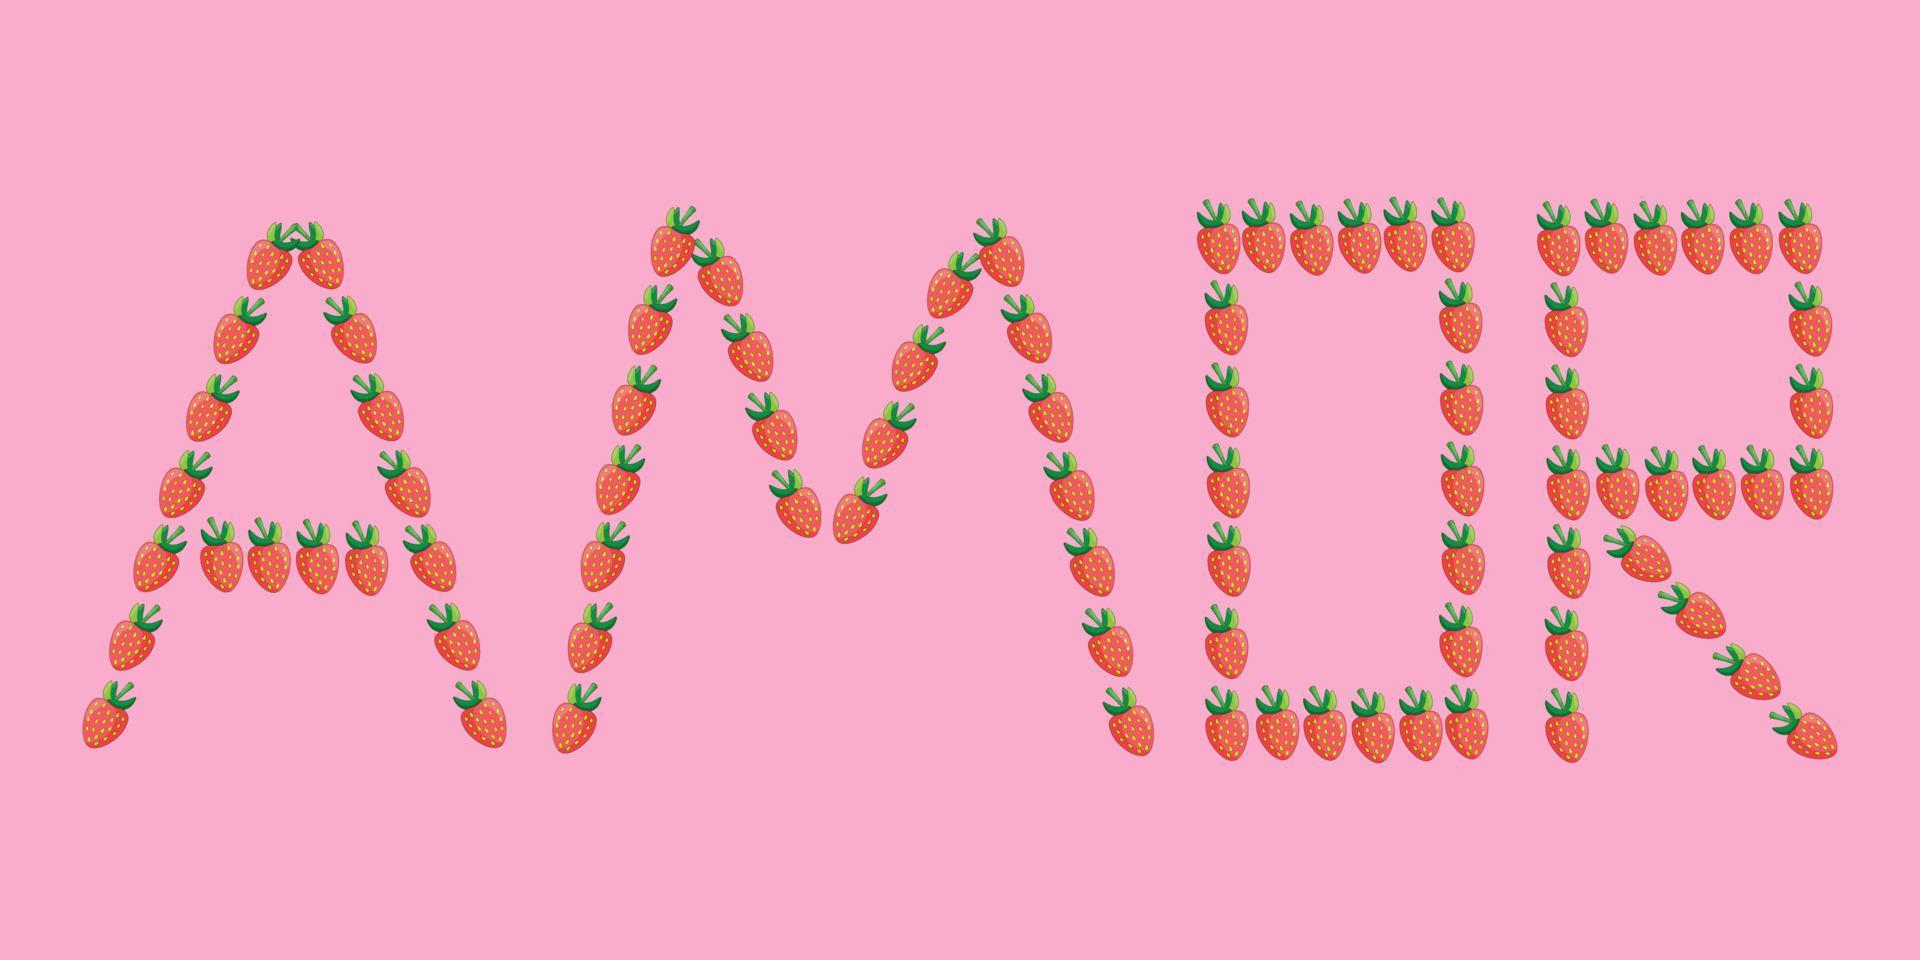 woord liefde van aardbeien in Spaans vector